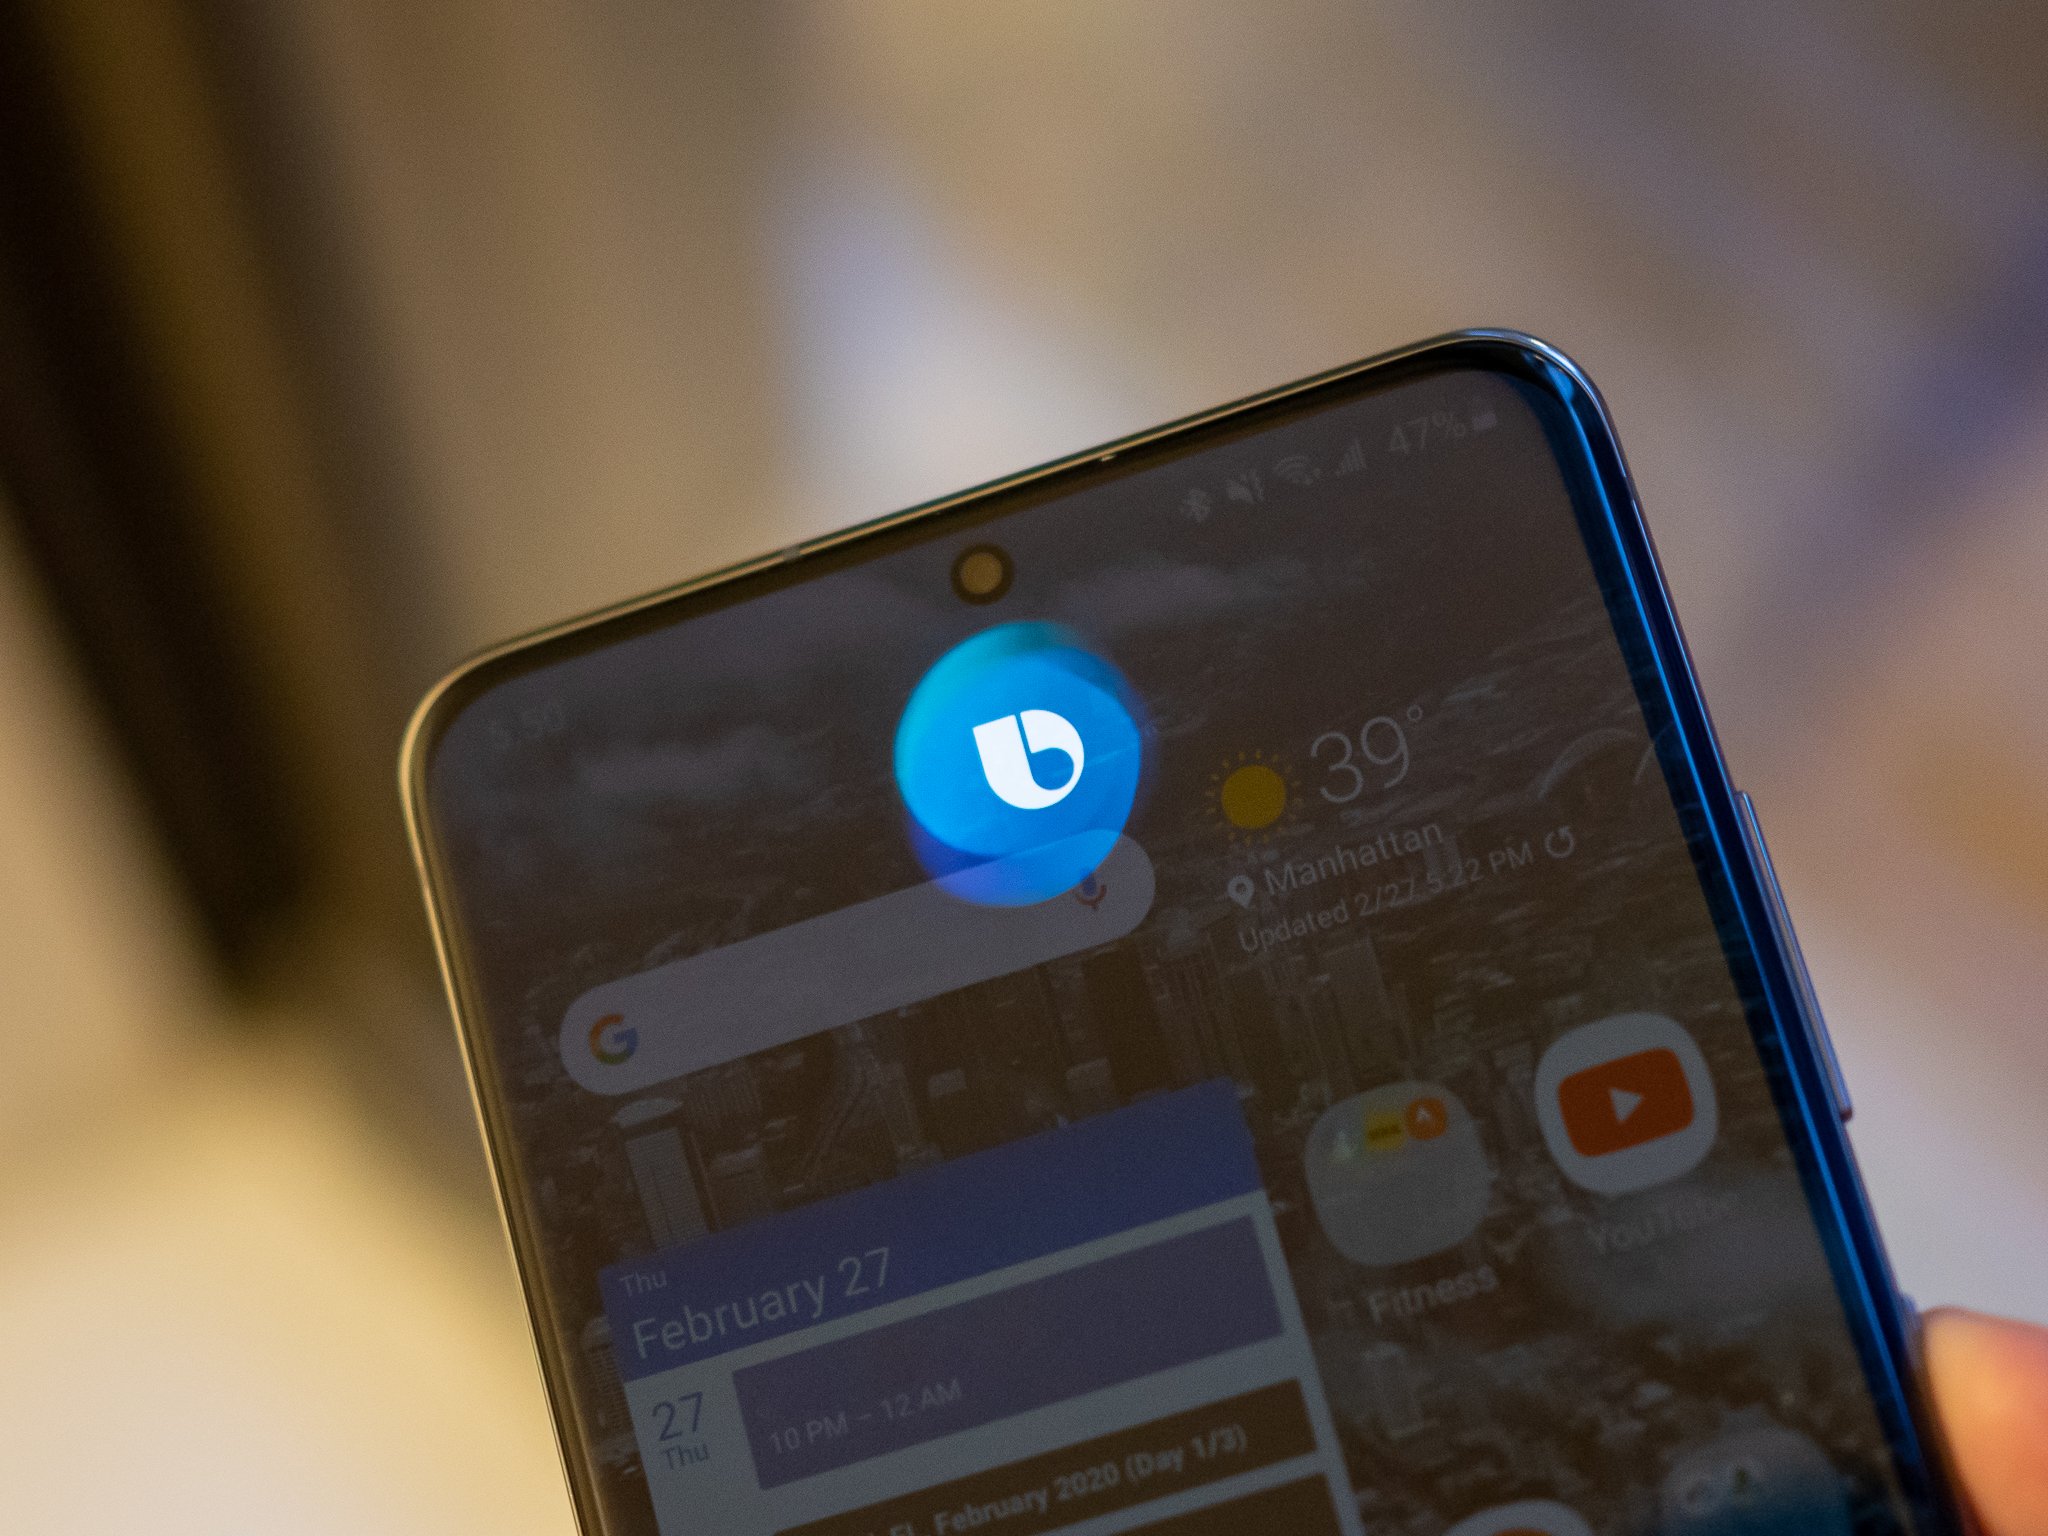 Bixby Voice on the Galaxy S20 Ultra